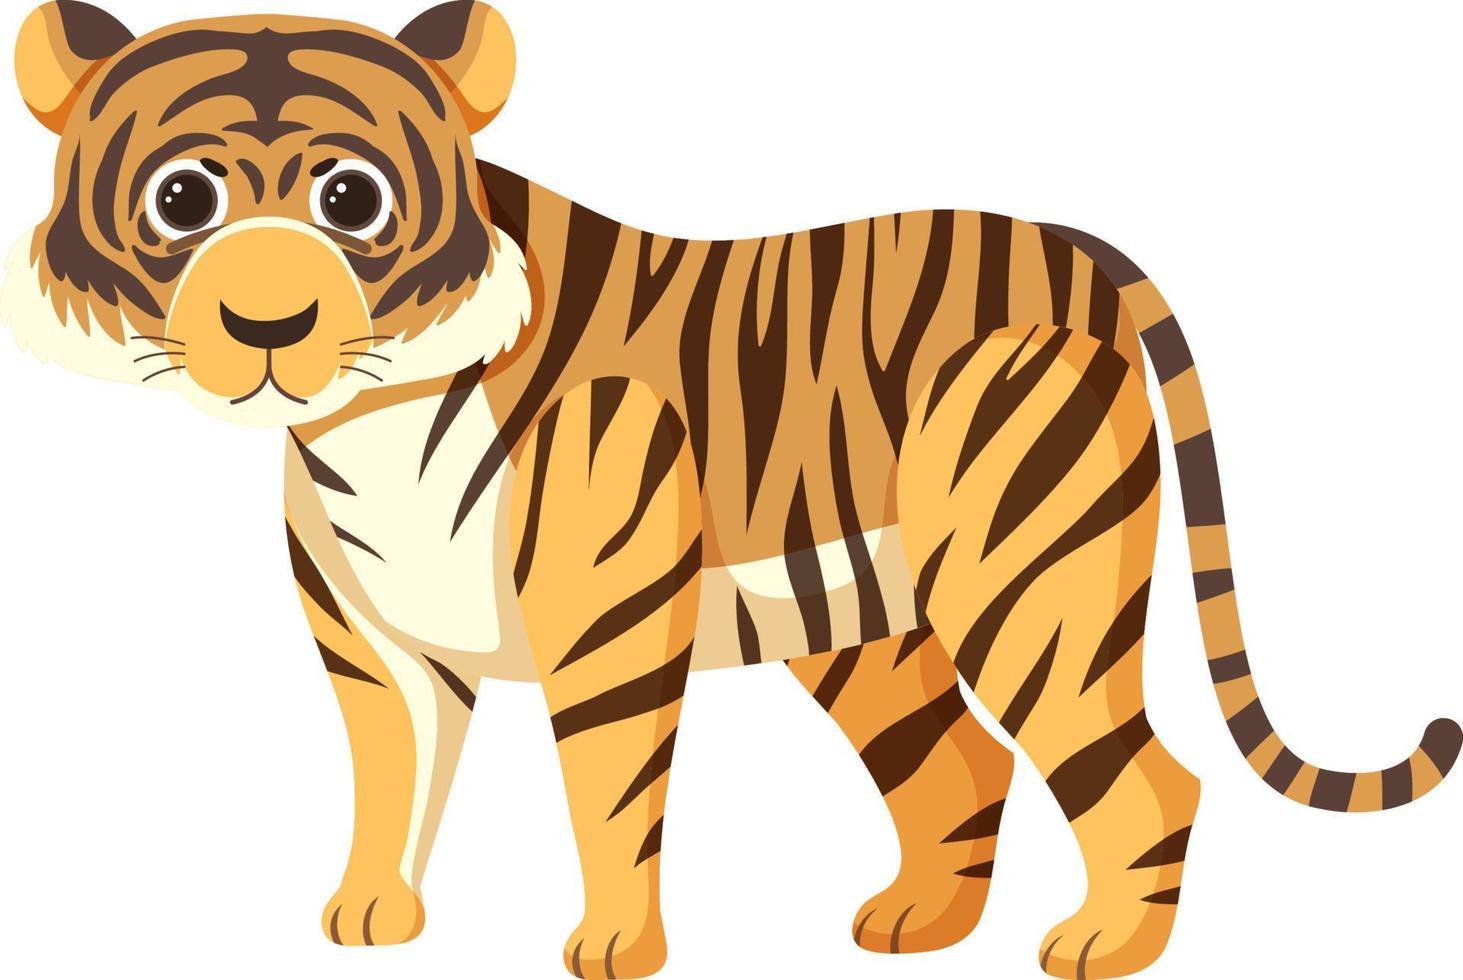 tigre mignon en style cartoon plat vecteur